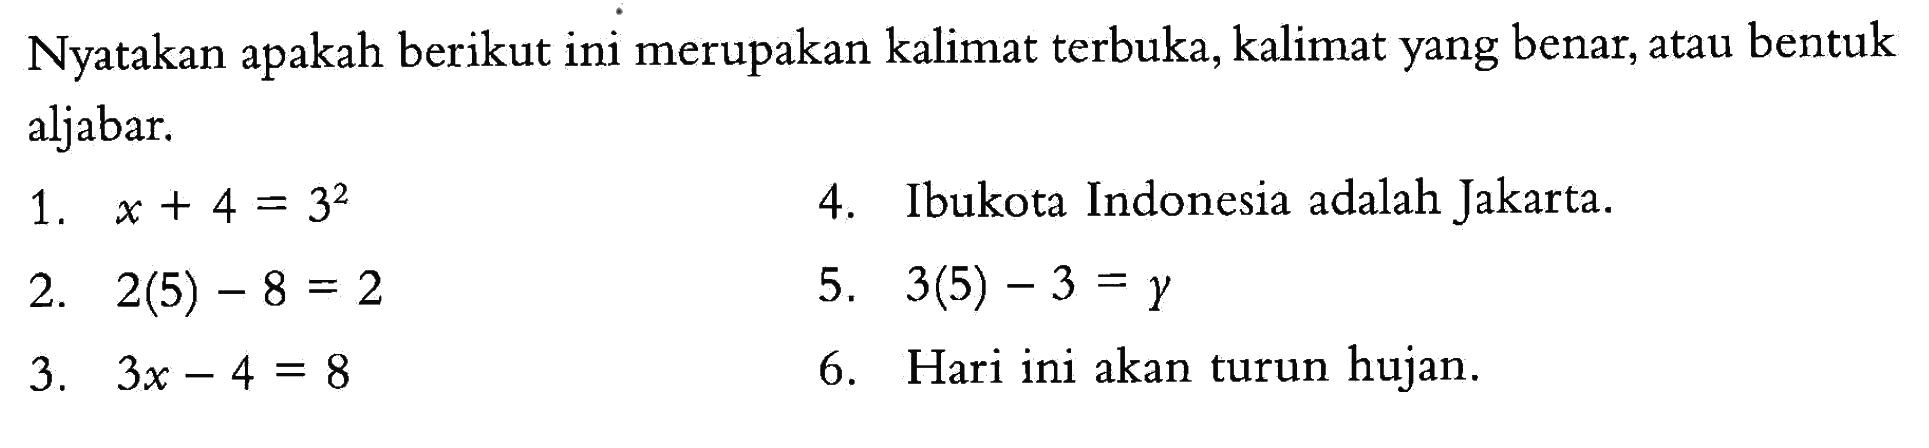 Nyatakan apakah berikut ini merupakan kalimat terbuka, kelimat yang benar, atau bentuk aljabar. 1. x + 4 = 3^2 2. 2(5) - 8 = 2 3. 3x - 4 = 8 4. Ibukota Indonesia adalah Jakarta 5. 3(5) - 3 = y 6. Hari ini akan turun hujan.